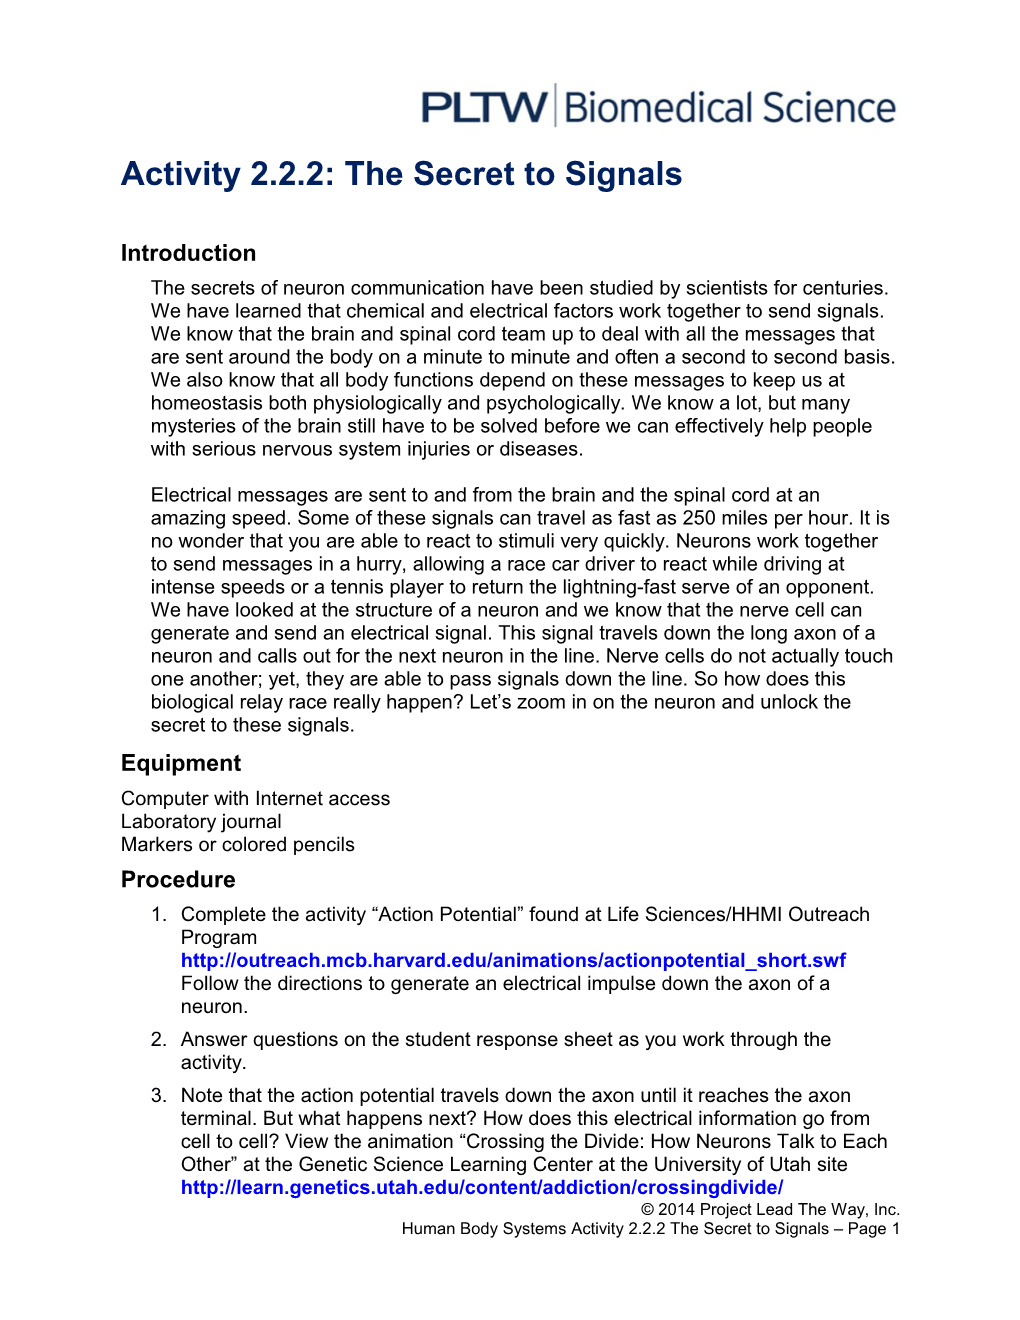 Activity 2.2.2: the Secret to Signals